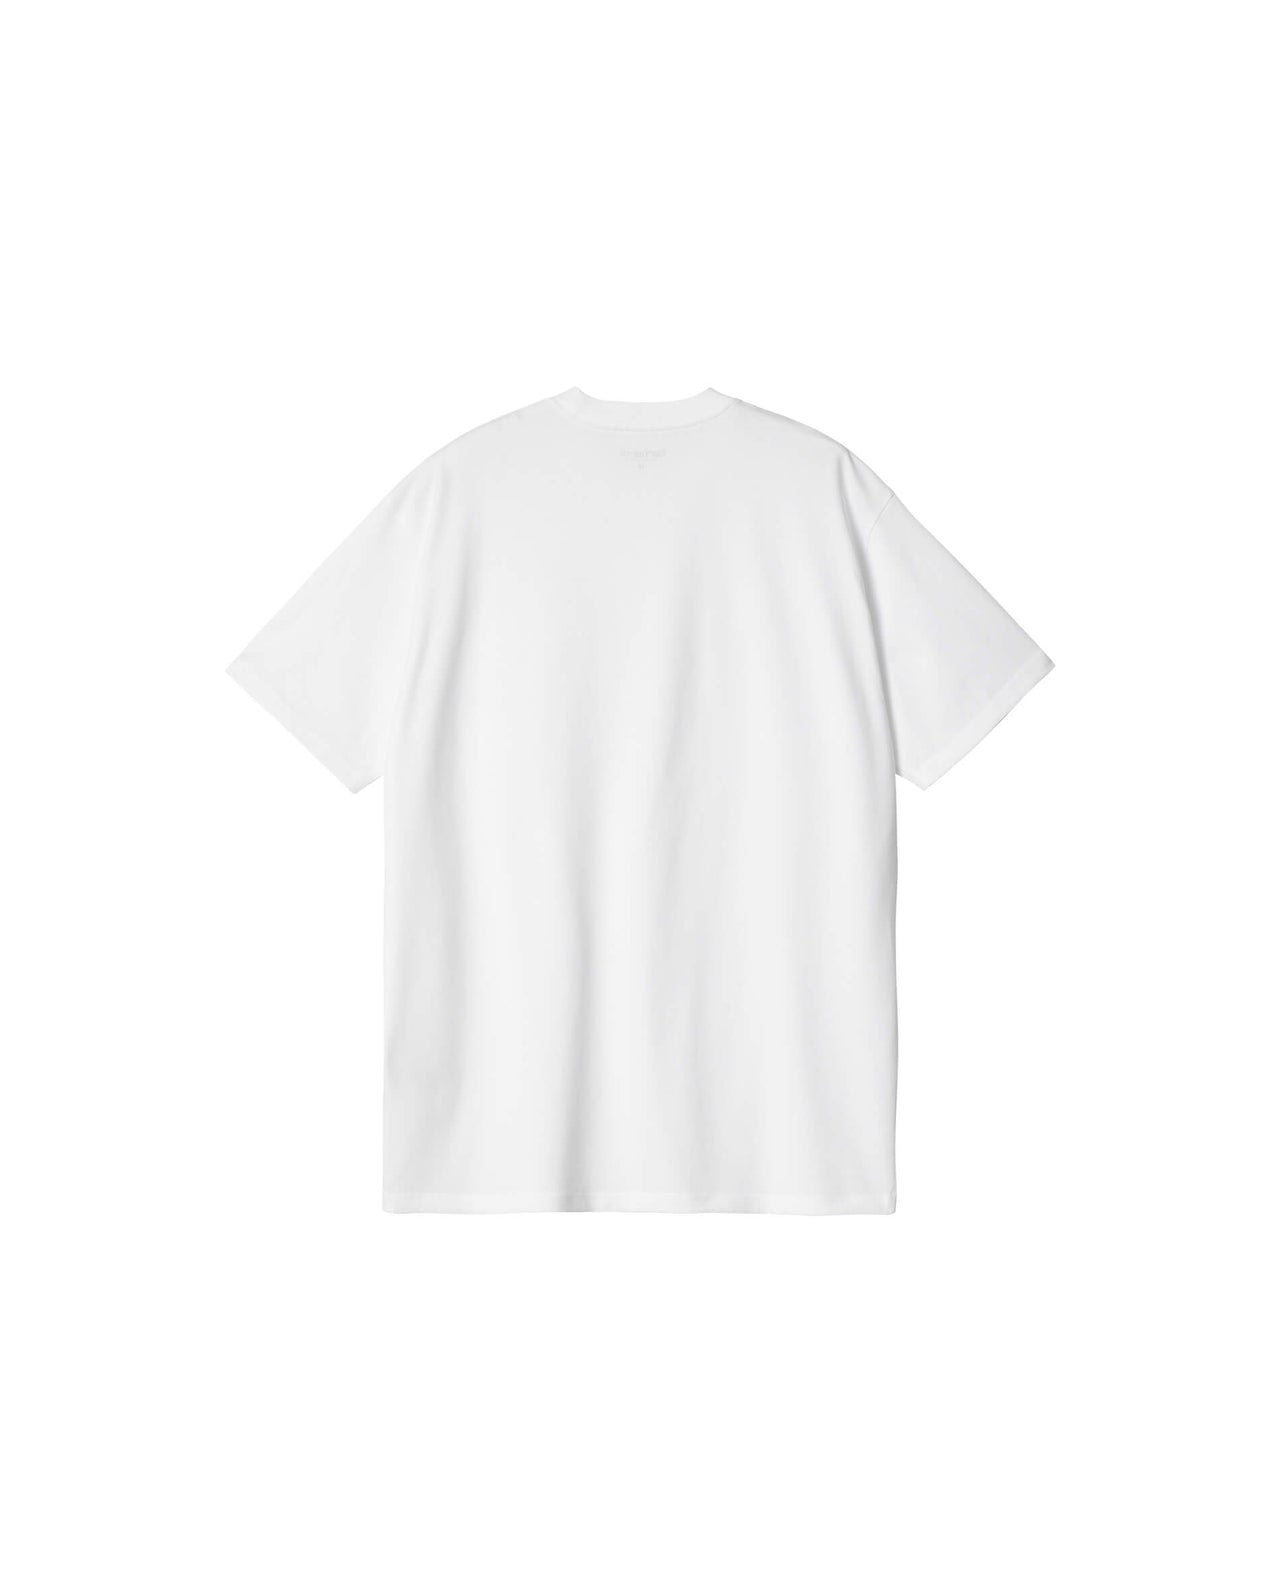 Carhartt WIP Amour Pocket T-Shirt